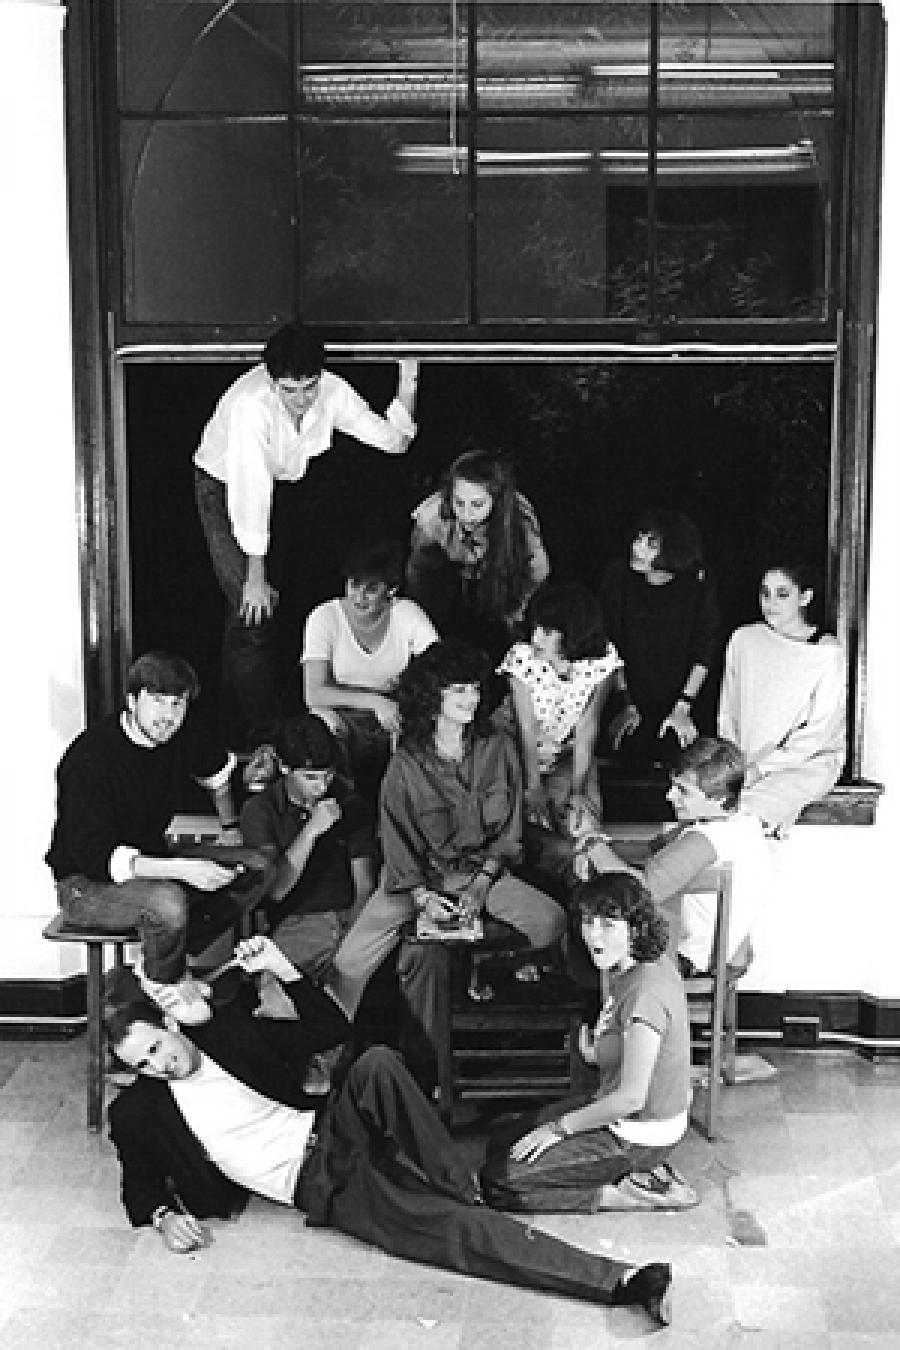  The Whistling Shrimp improv troupe in 1984